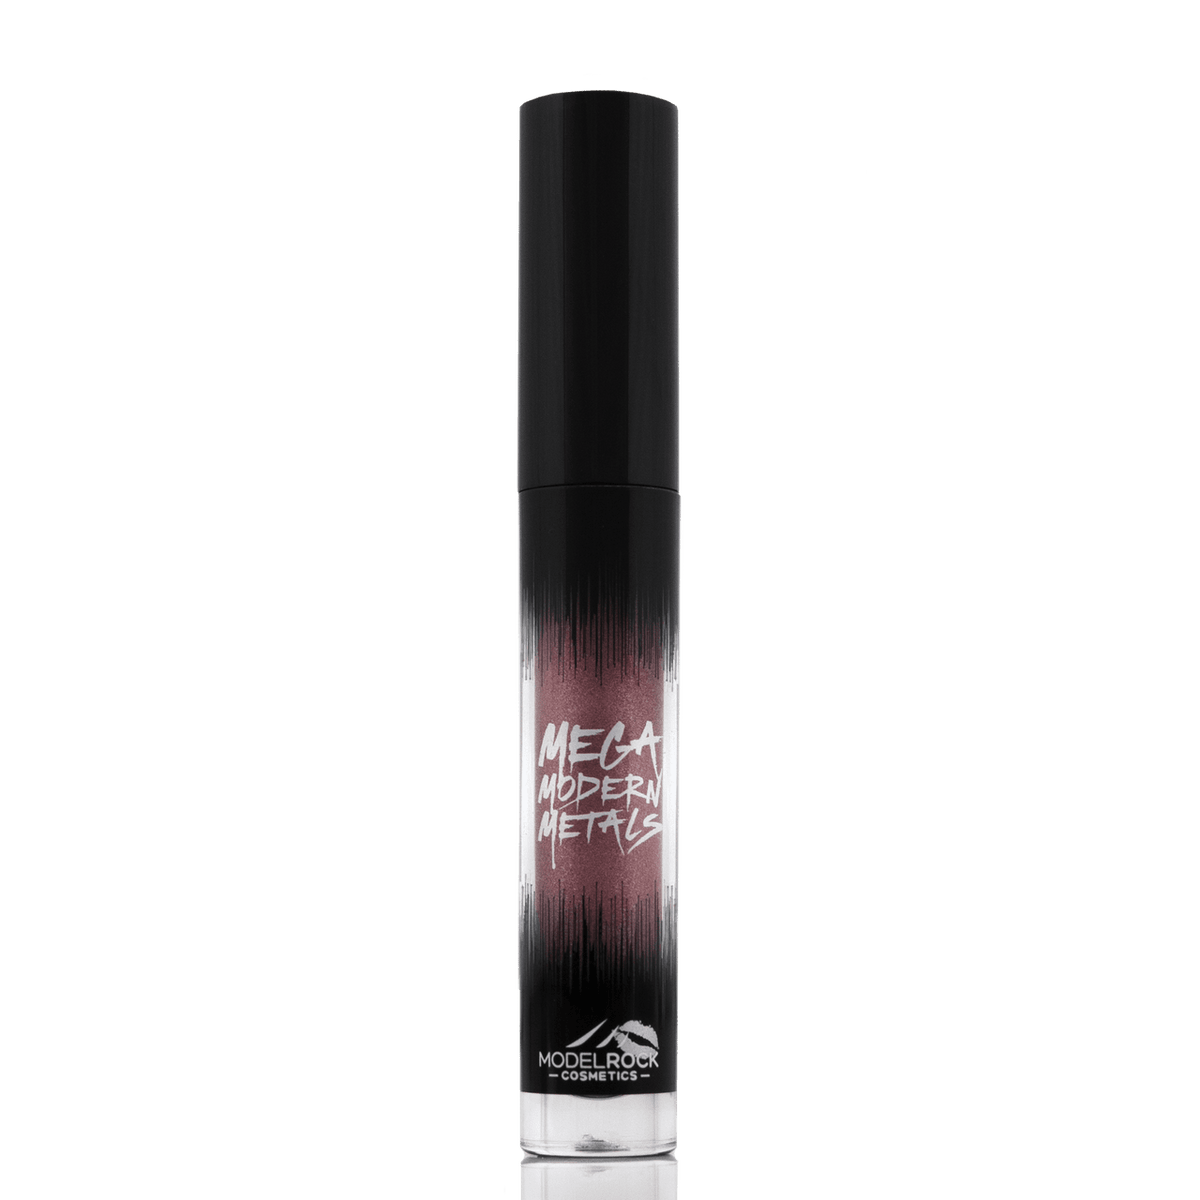 ModelRock Mouvetallic Mega Modern Metals Lipstick